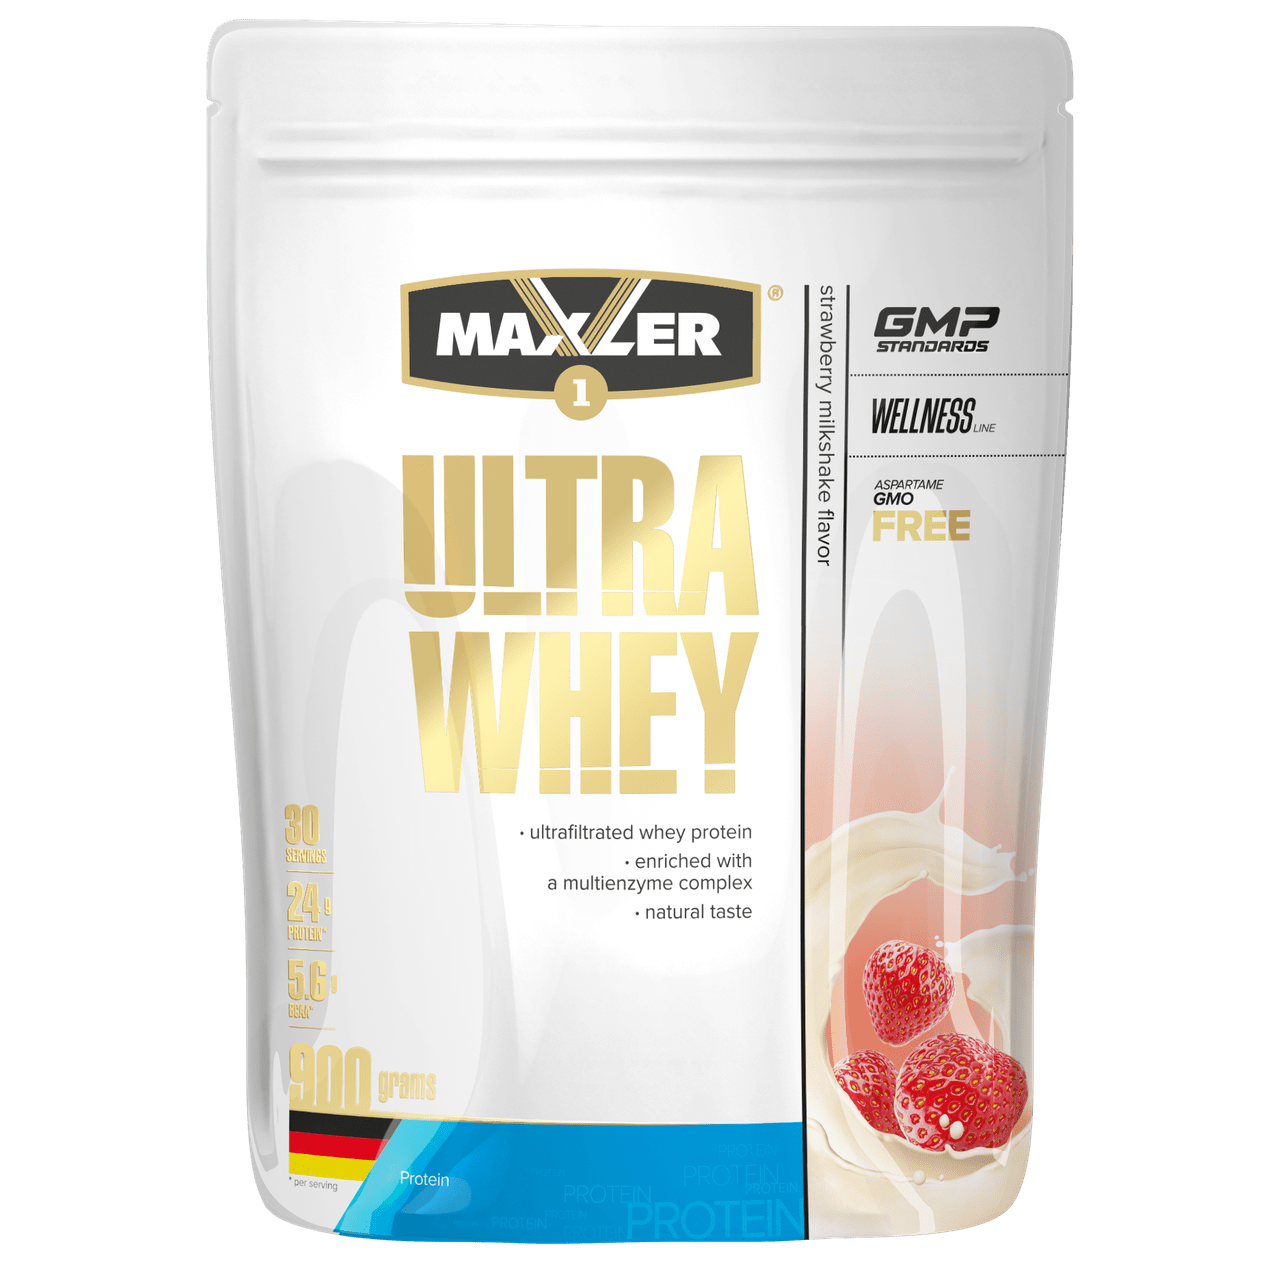 Комплексный протеин Maxler Ultra Whey (900 г) пакет макслер strawberry milkshake,  ml, Maxler. Protein Blend. 